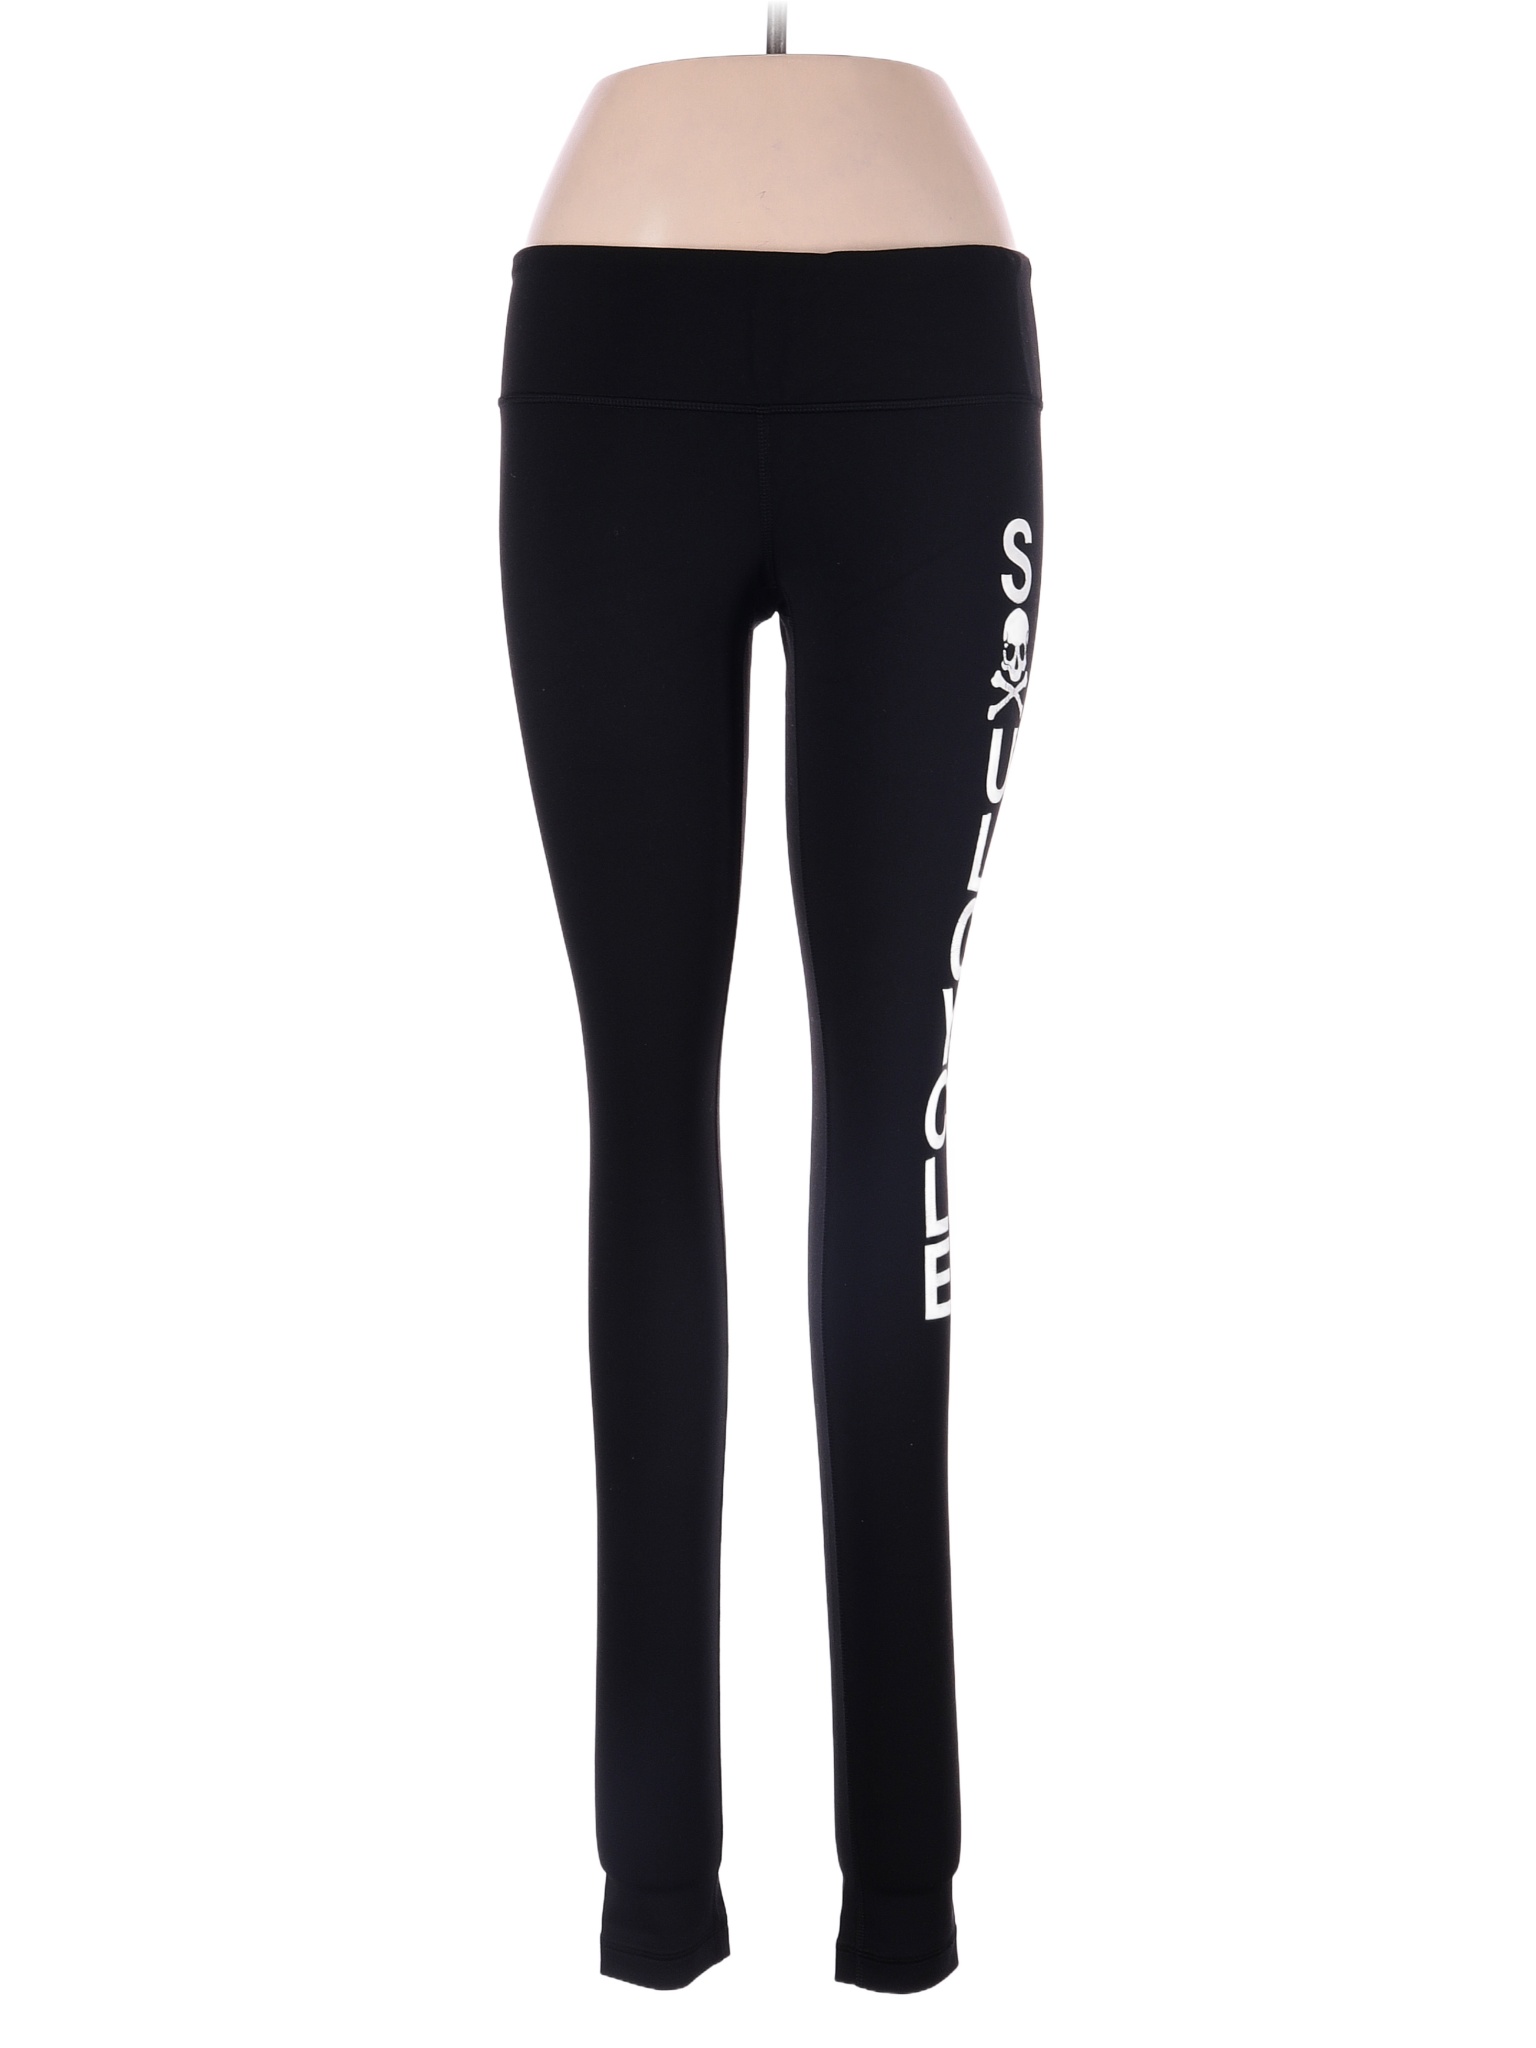 Lululemon Athletica Black Yoga Pants Size 6 - 70% off | thredUP